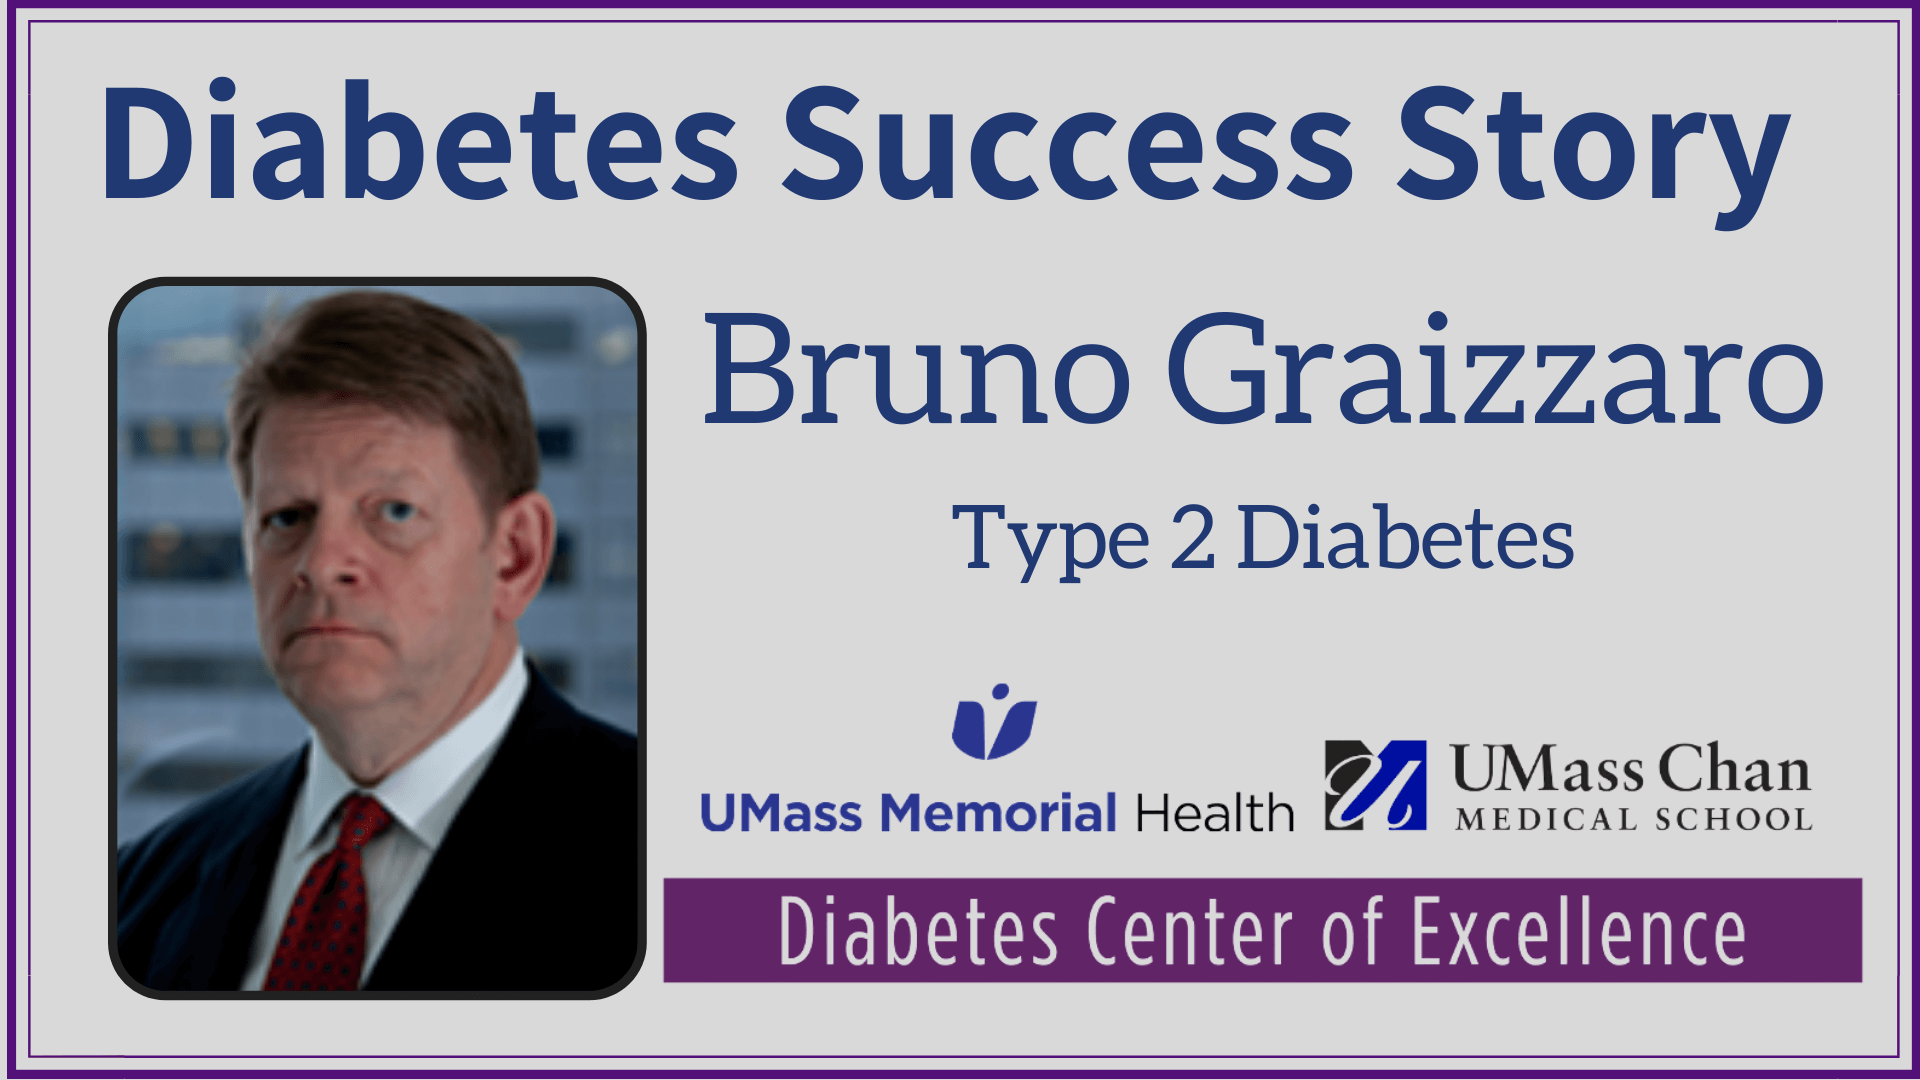 bruno-graizzaro-type-2-diabetes-success-story